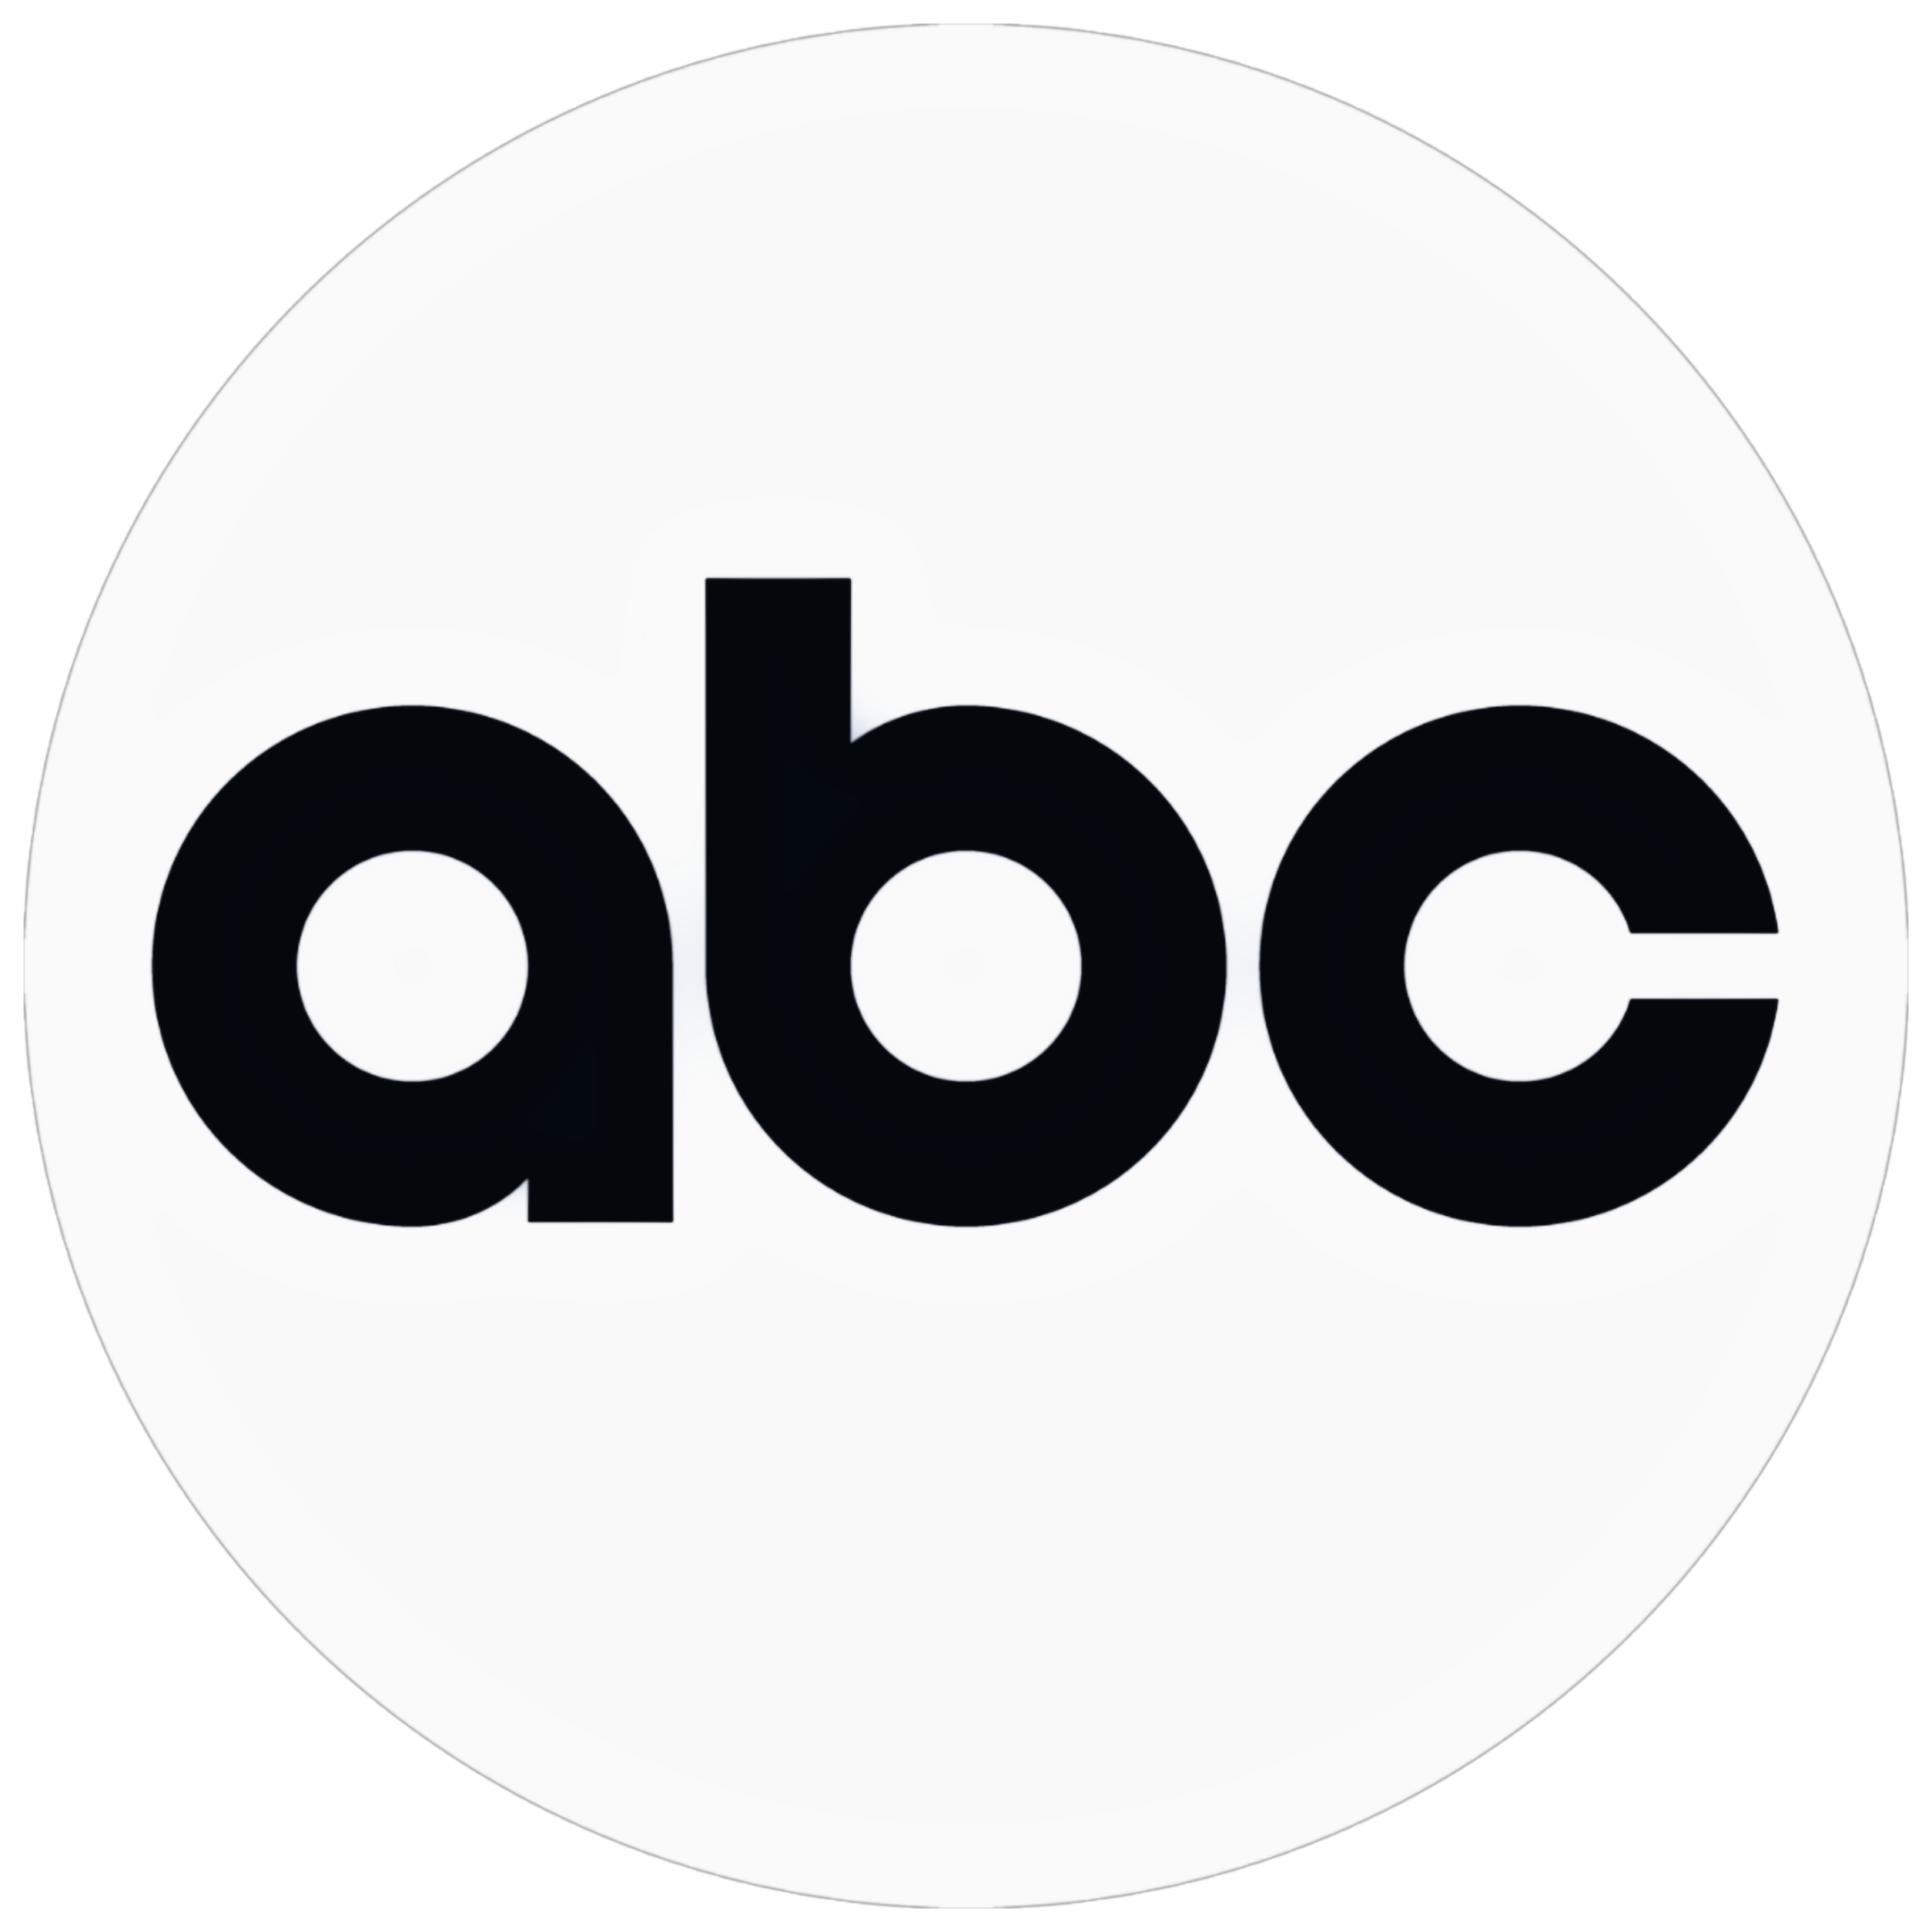 ABC Network Logo